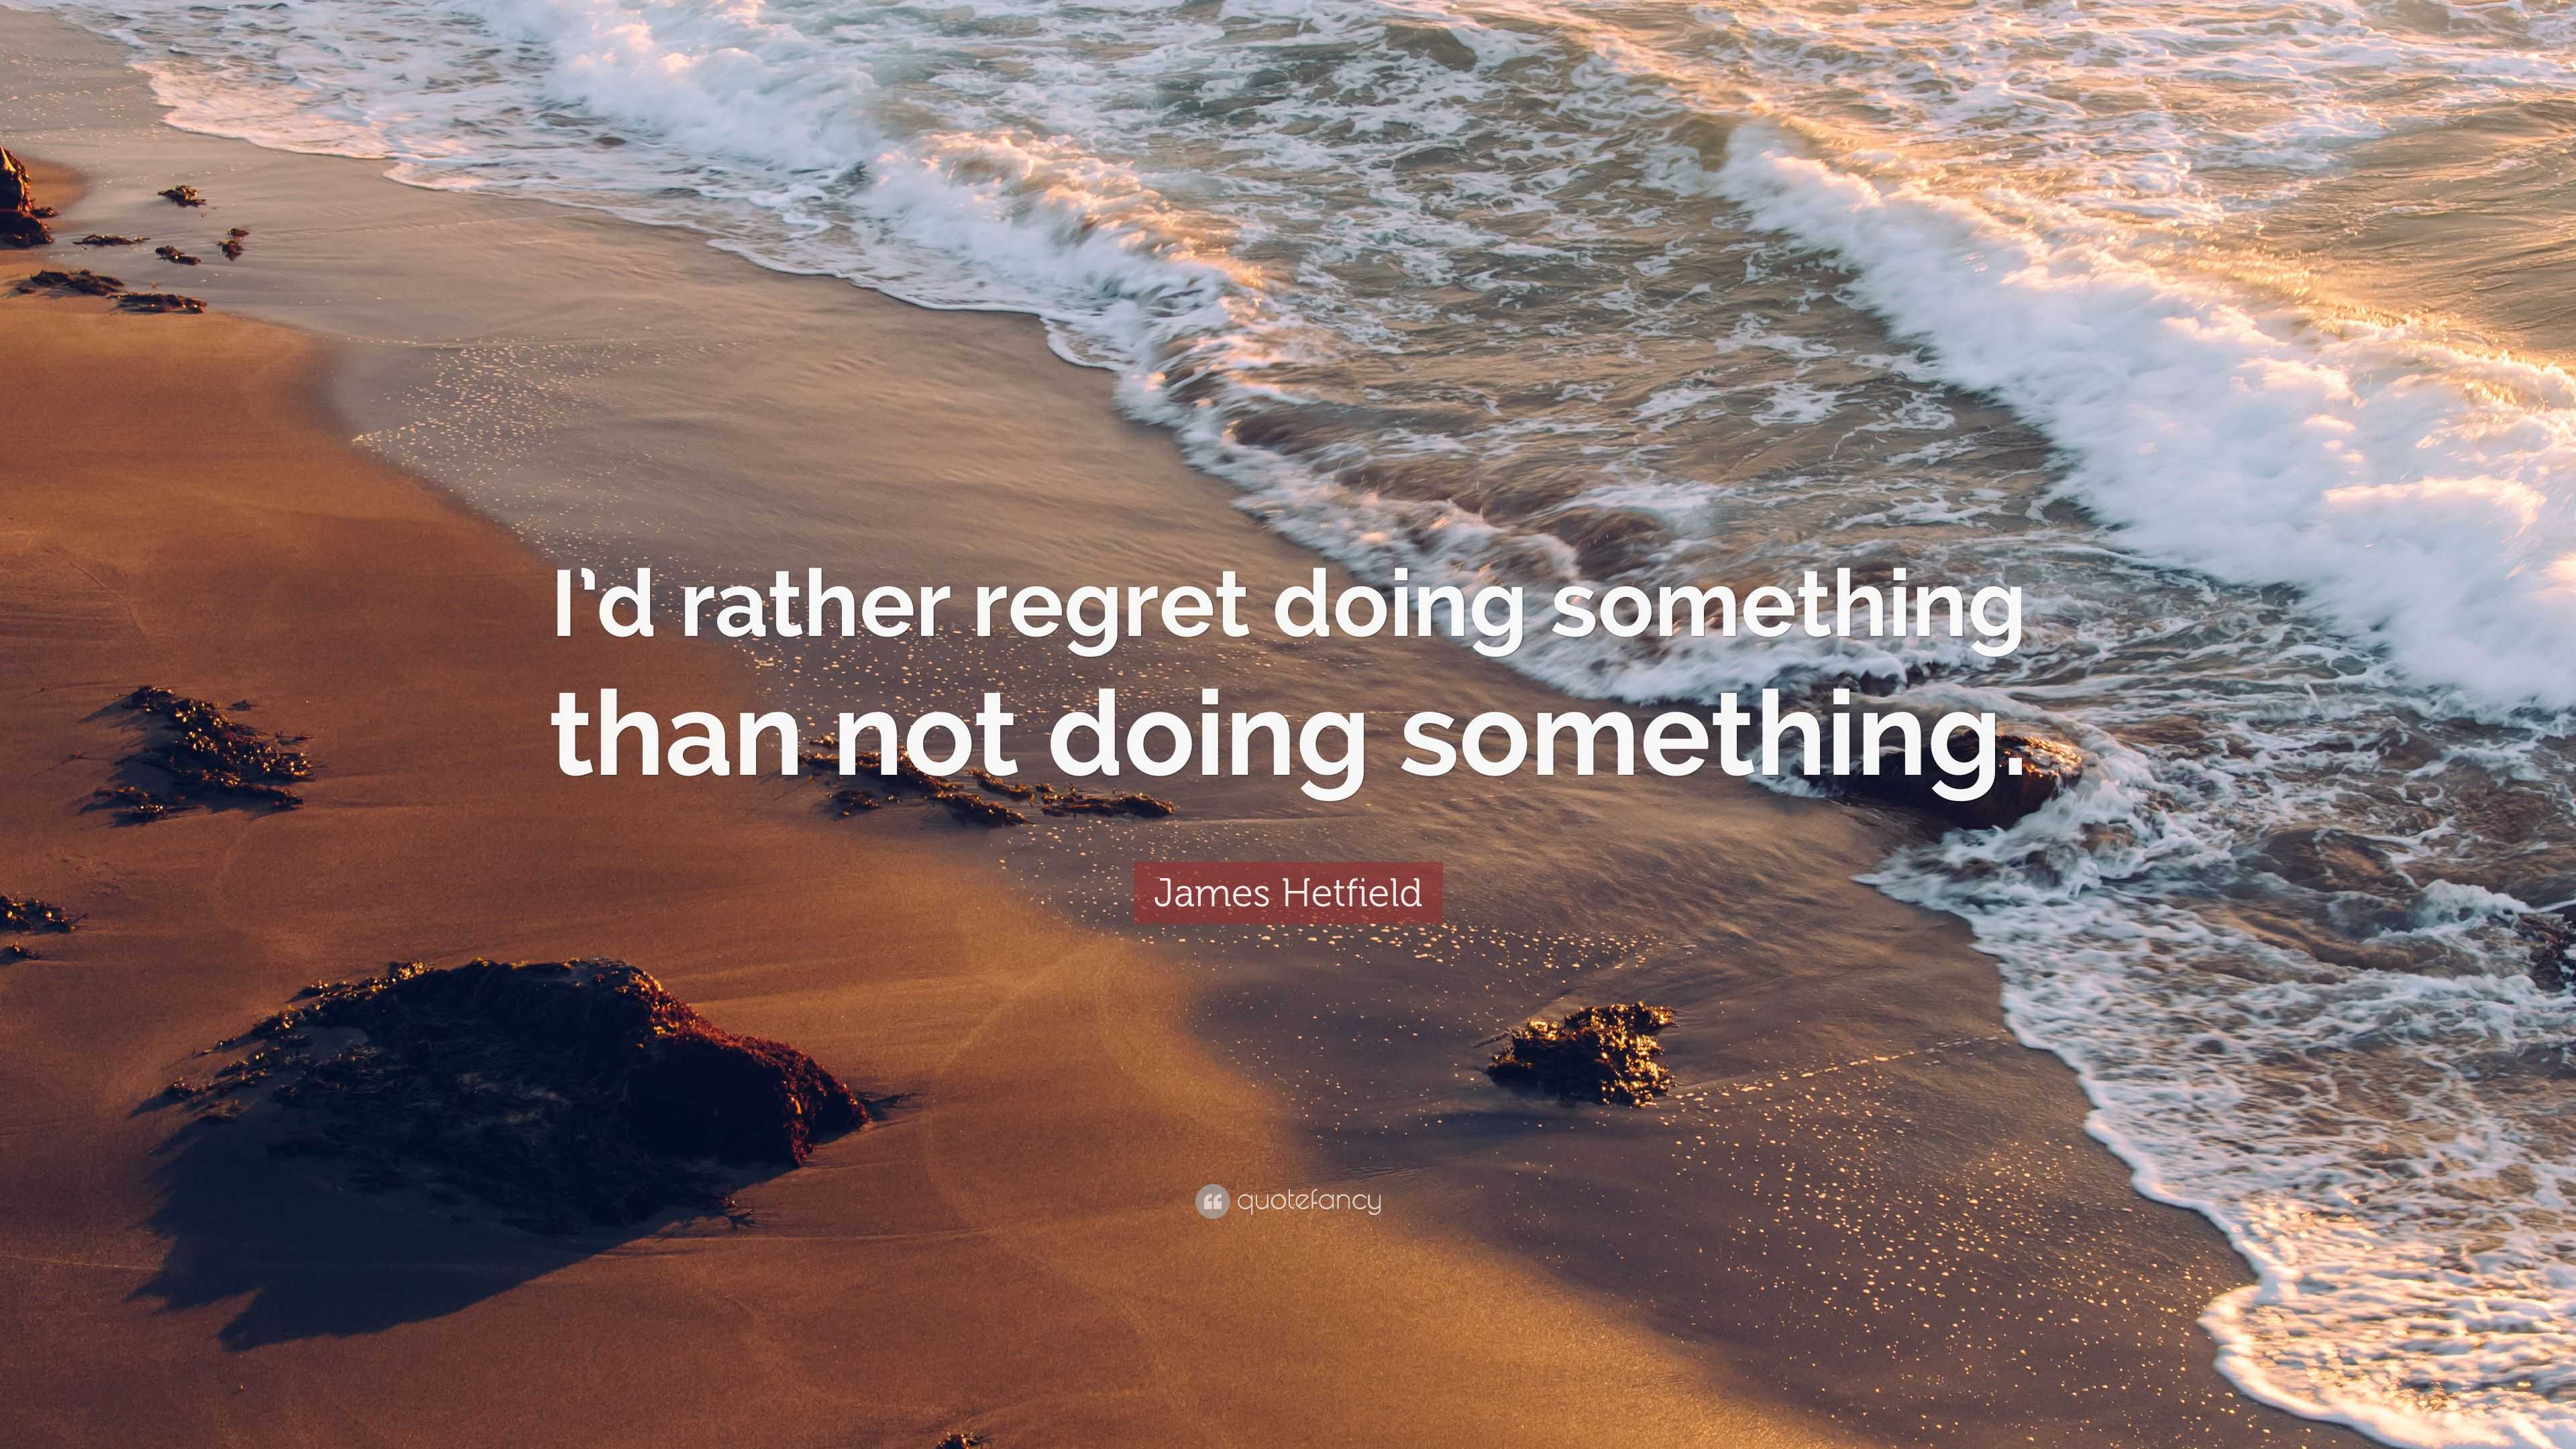 James Hetfield Quote “I’d rather regret doing something